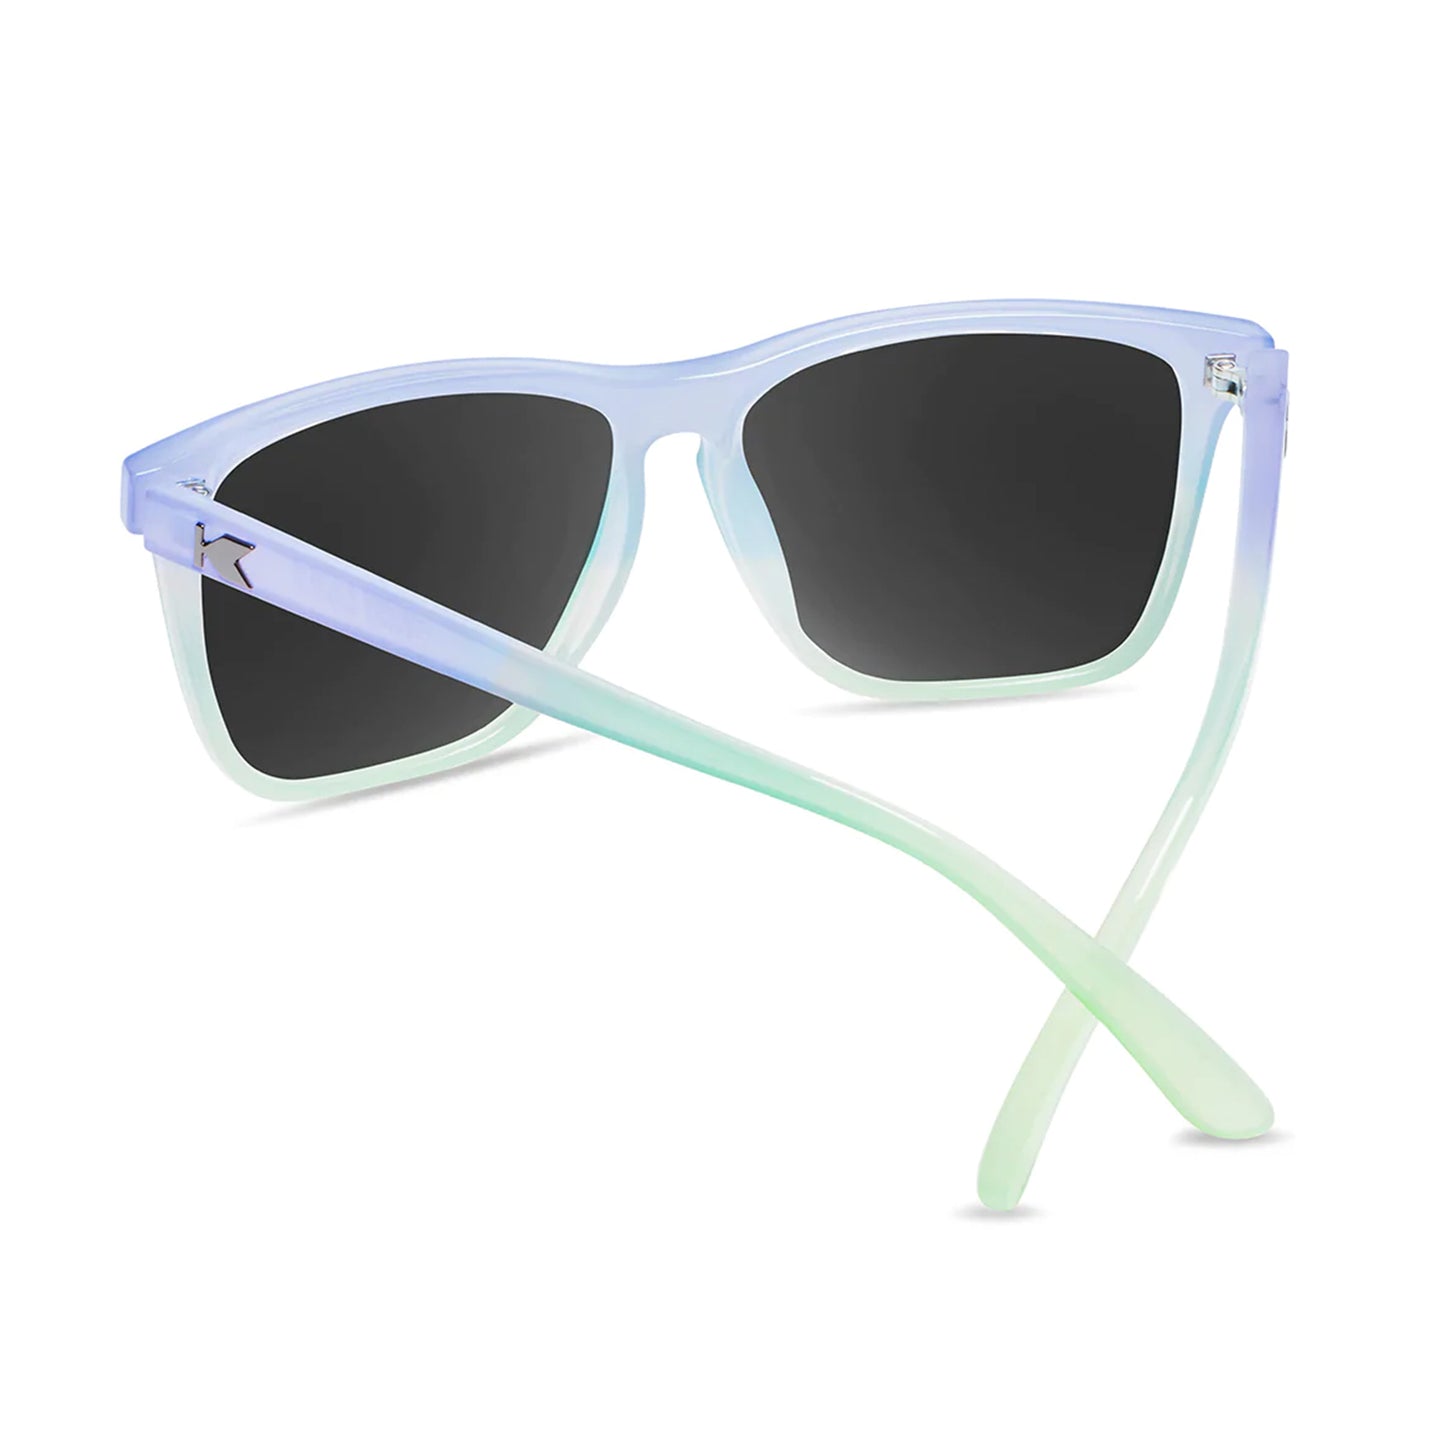 Knockaround Handeye Supply Co Sunglasses